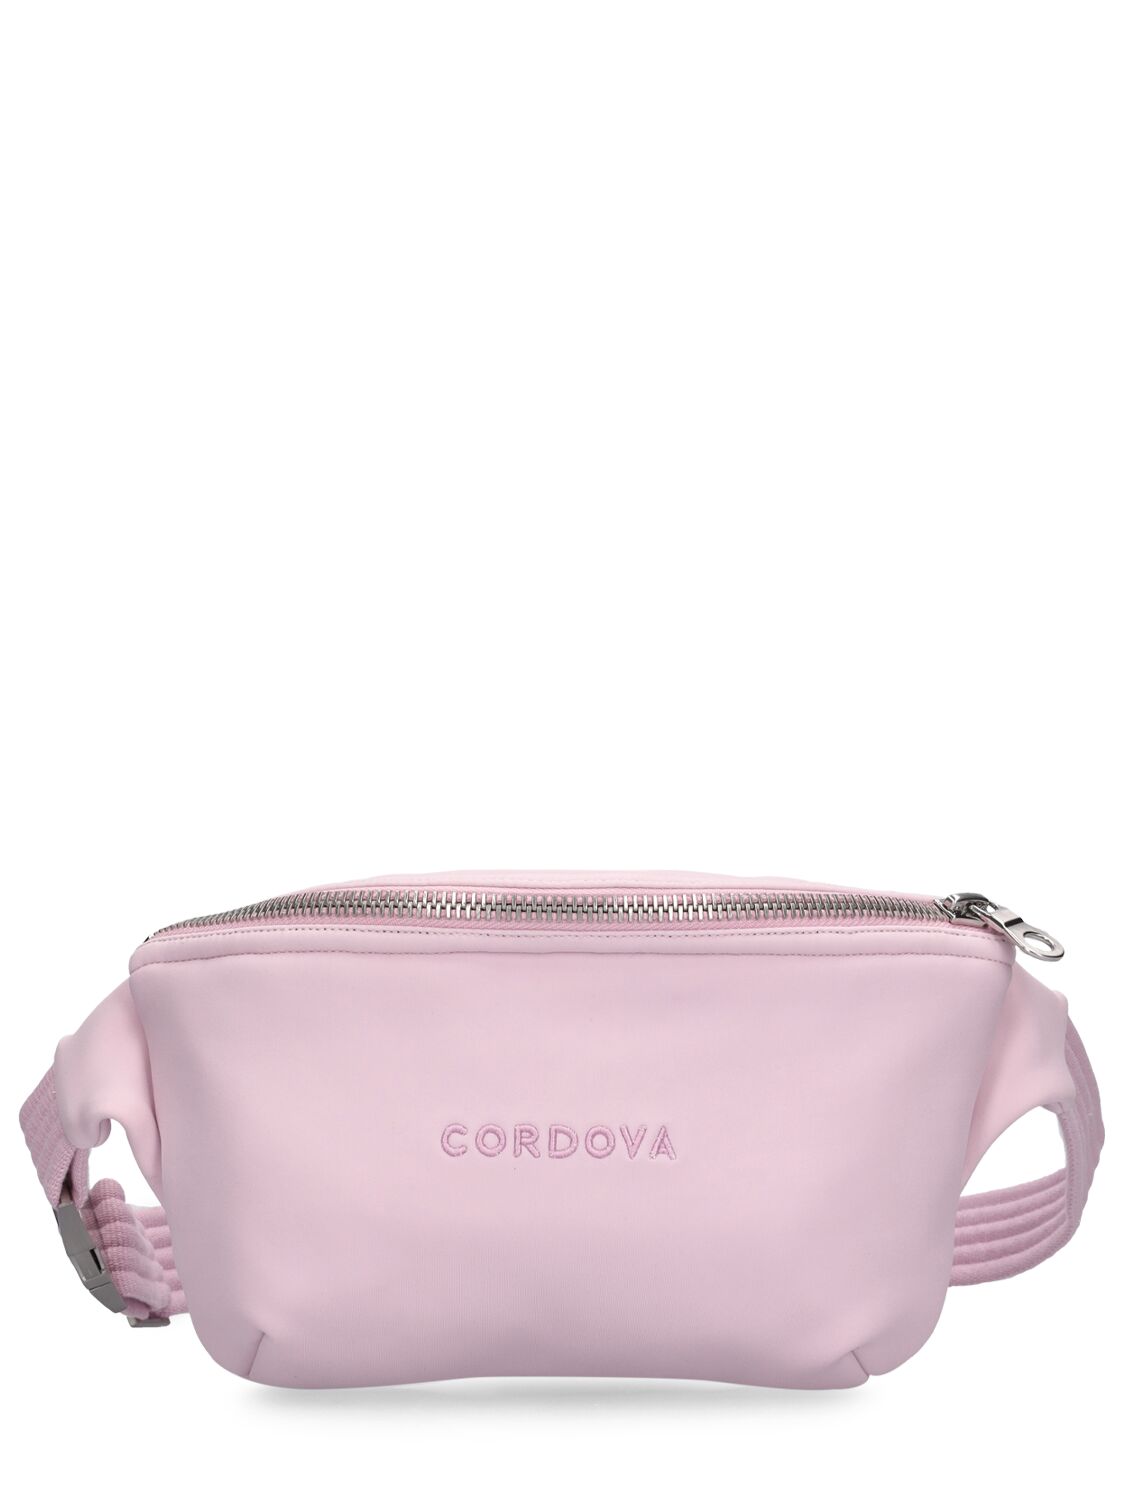 Image of Cordova Belt Bag